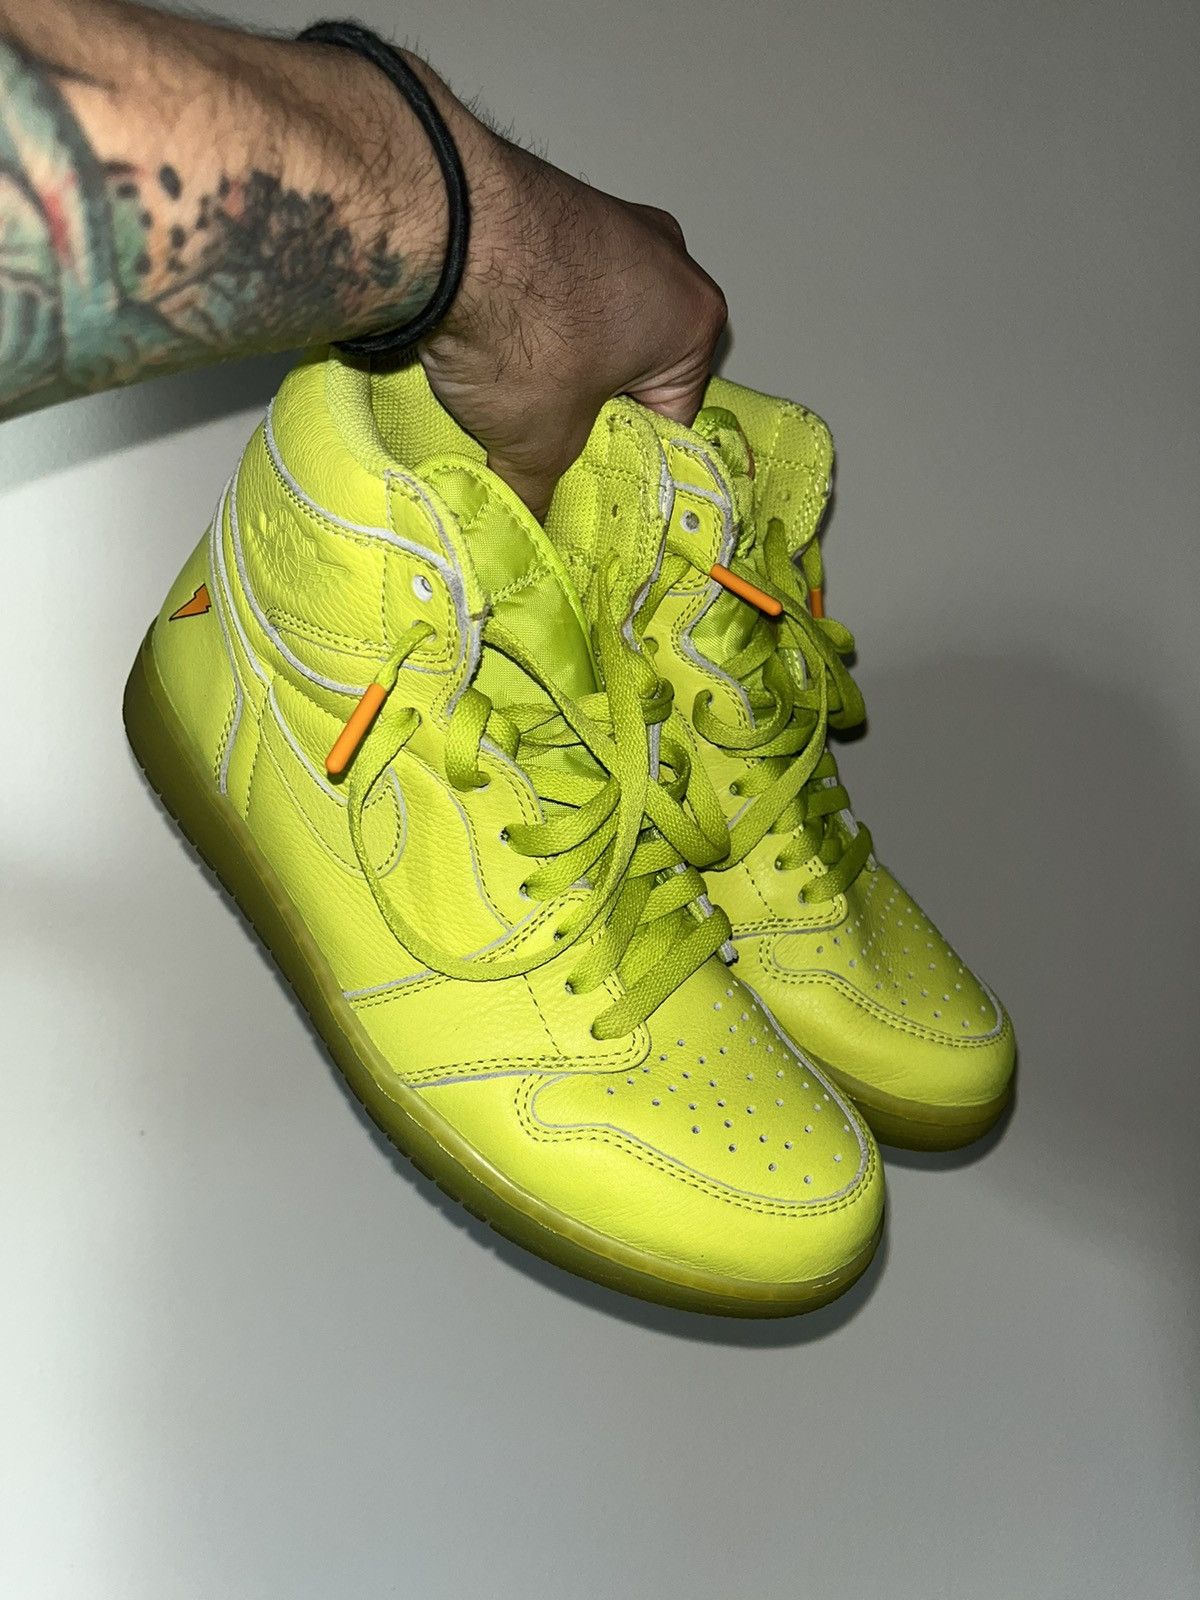 Nike Nike Air Jordan 1 High OG Gatorade Lemon Lime | Grailed